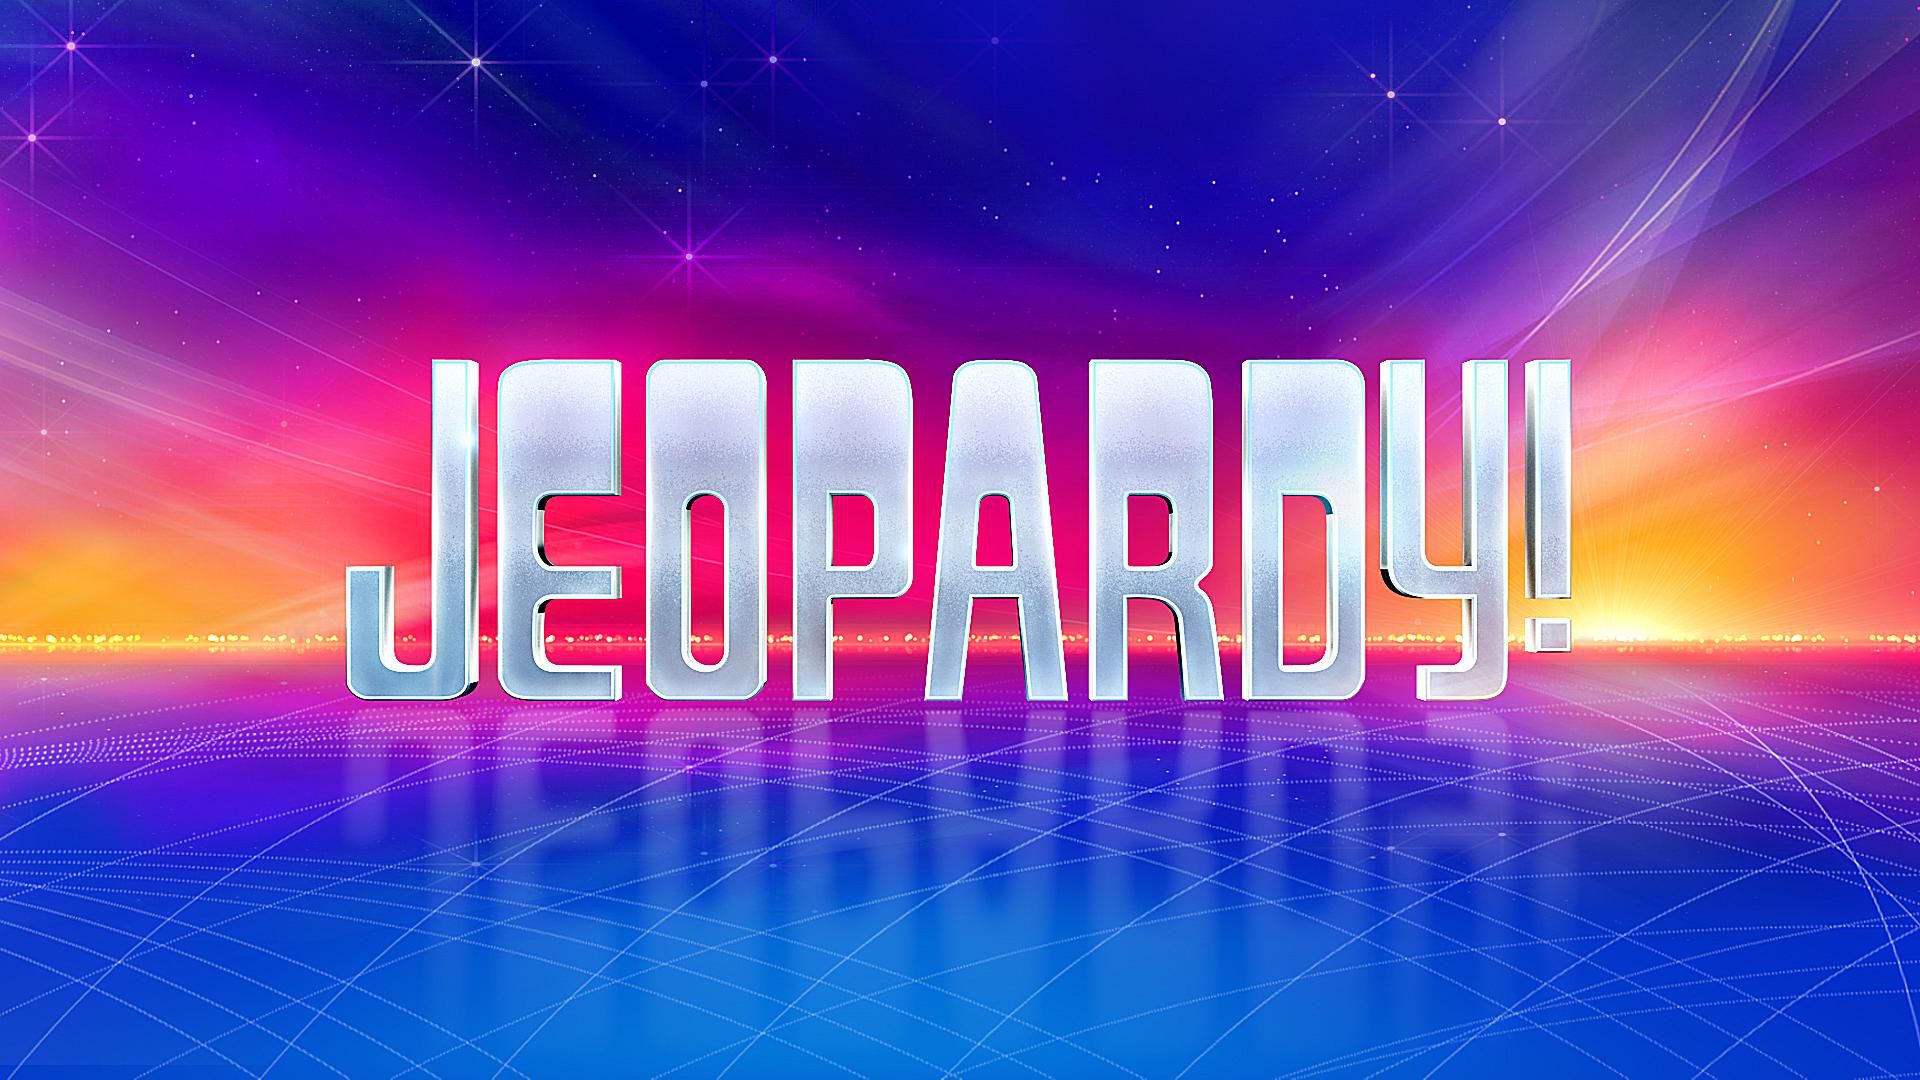 Jeopardy A Brief History